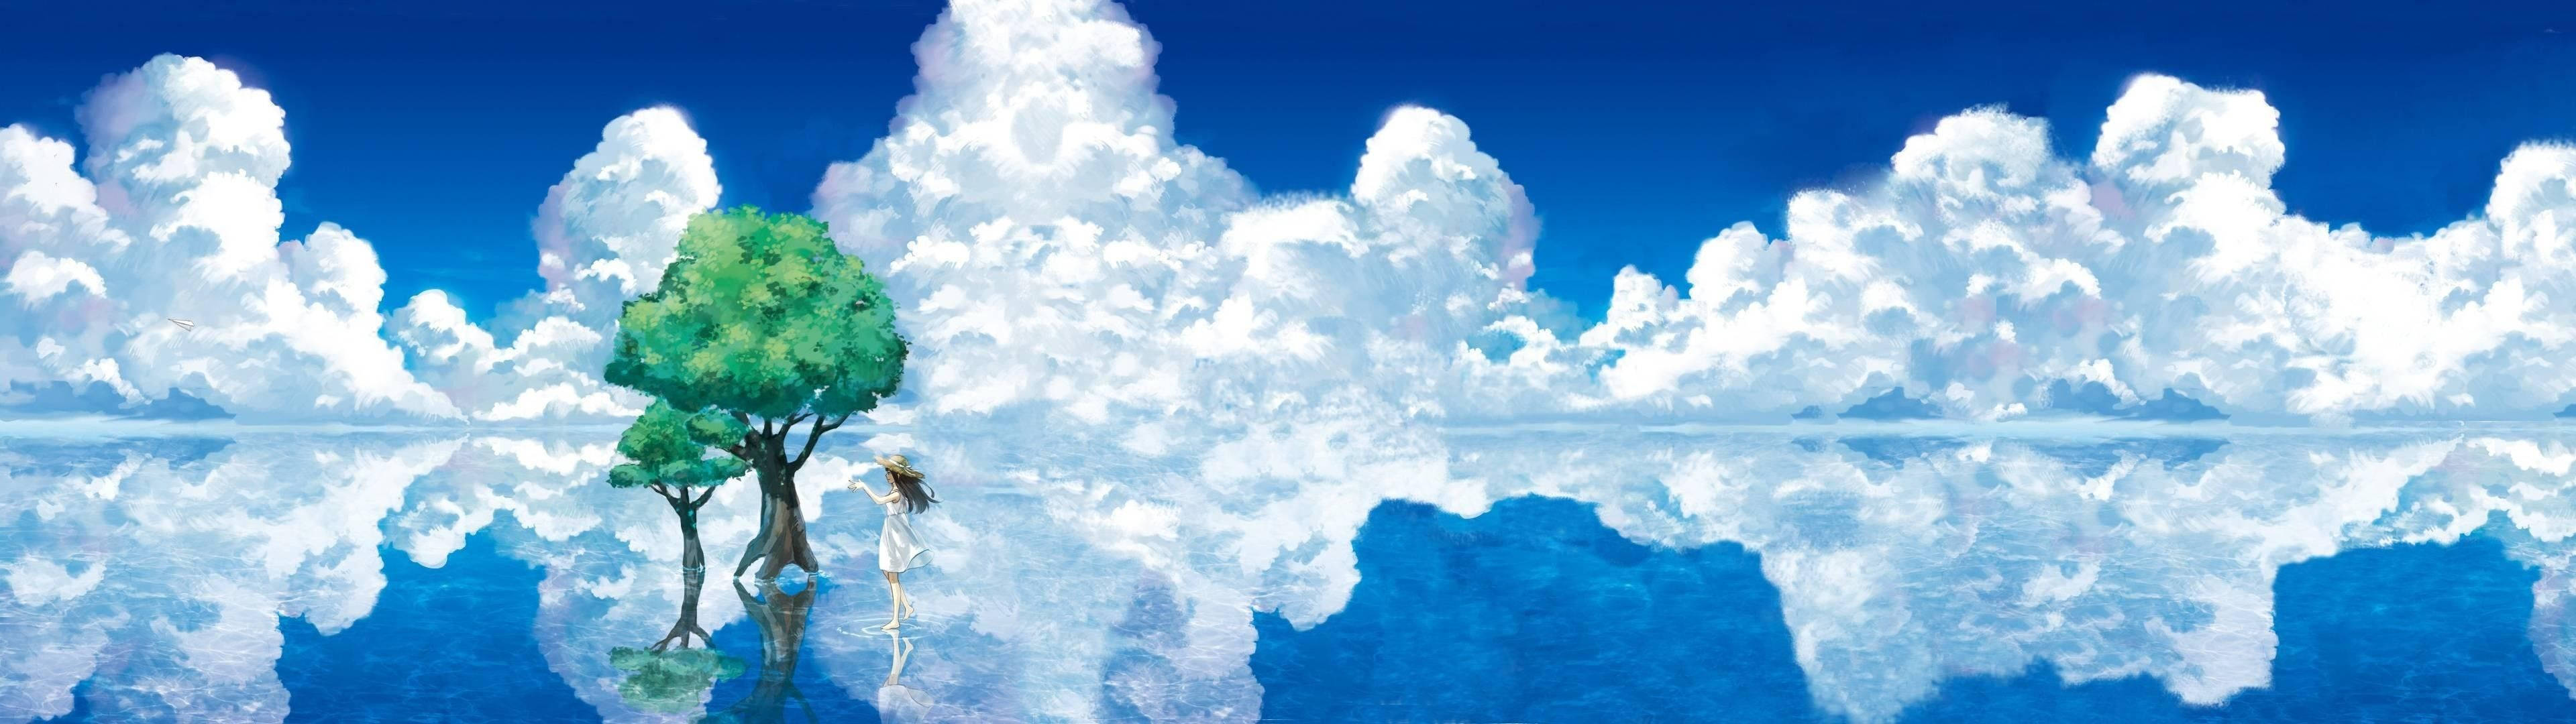 3840x1080 Anime Landscape Dual Screen Wallpaper 3840x1080 Download Hd Image Wallpaper